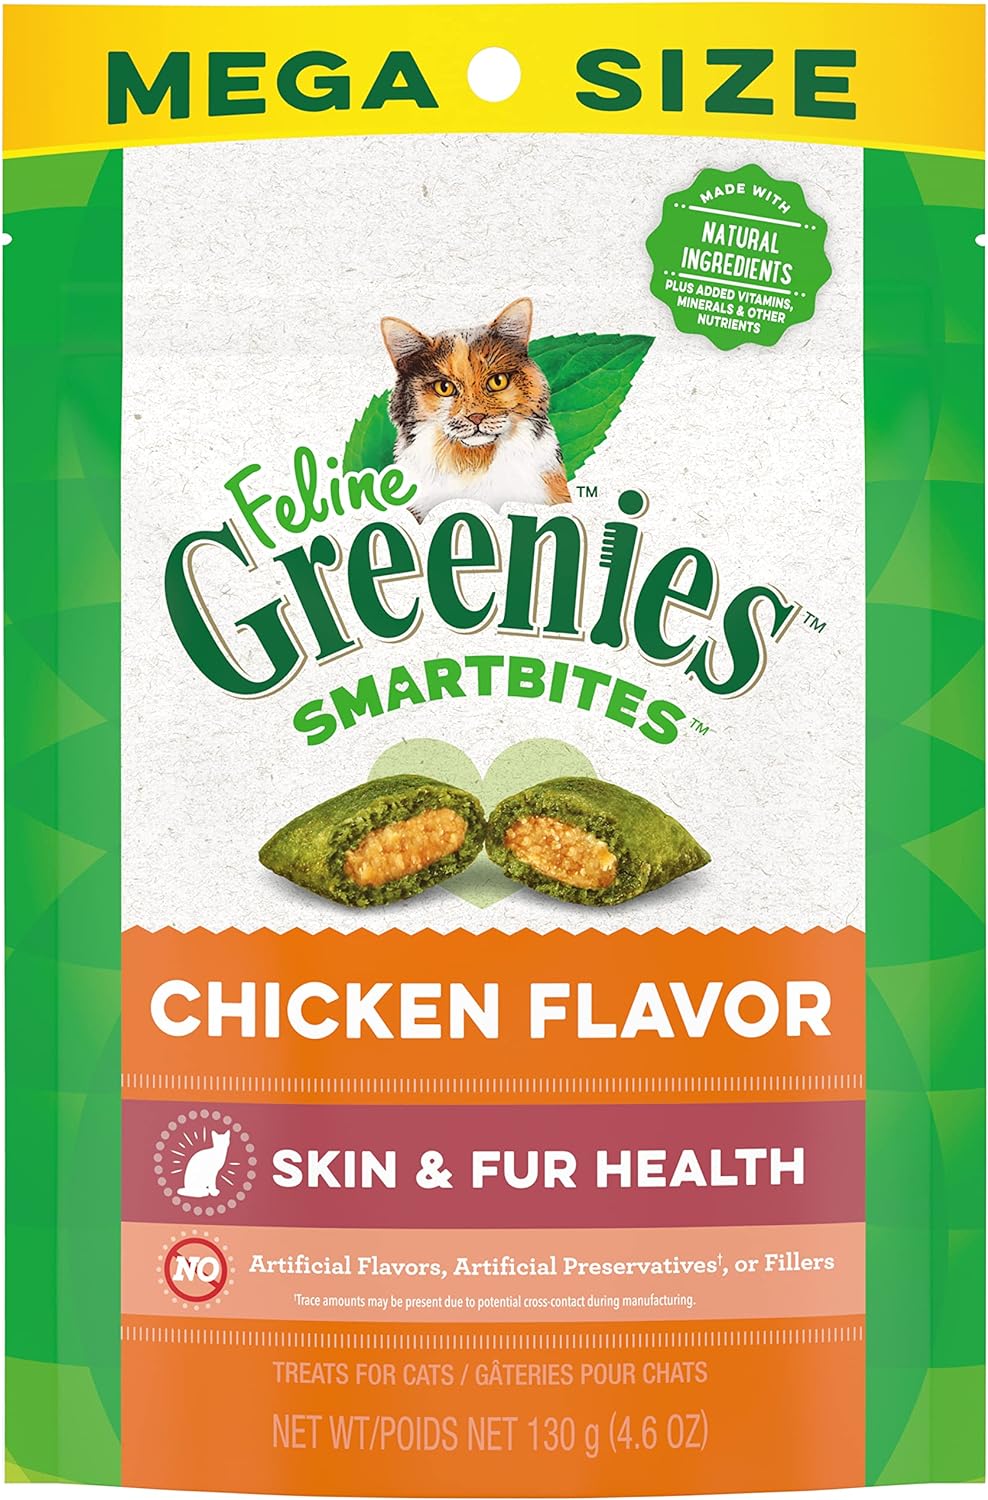 Greenies Feline Smartbites Skin & Fur Crunchy and Soft Natural Cat Treats, Chicken Flavor, 4.6 oz. Pack